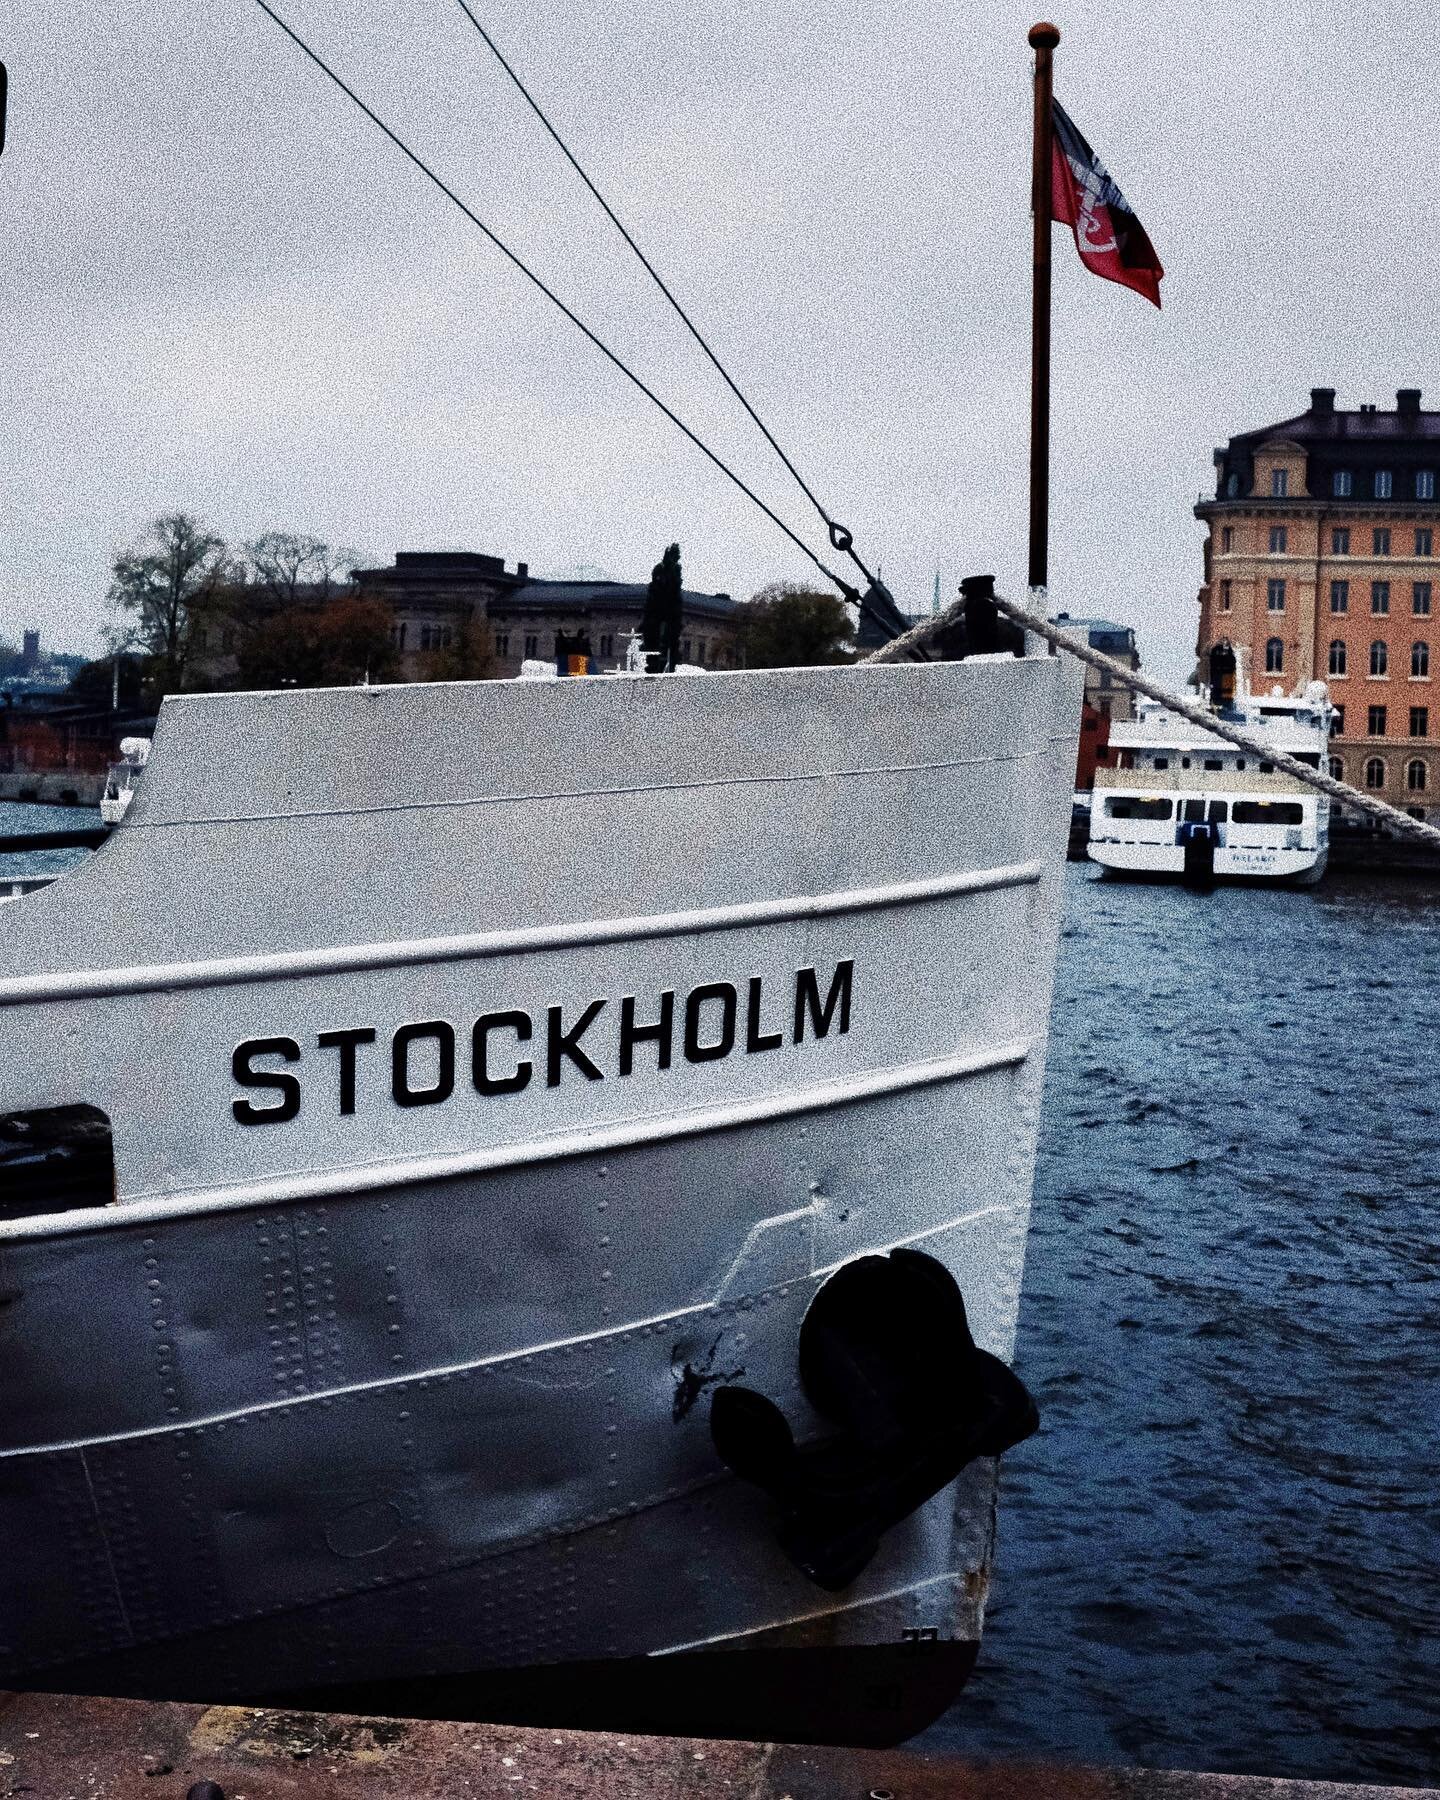 #stockholm
.
#sweden #upnorth #archipelago #theoutbound #abba #traveltheworld #escapeplan #&ouml;stermalm #capitalofscandinavia #homeawayfromhome